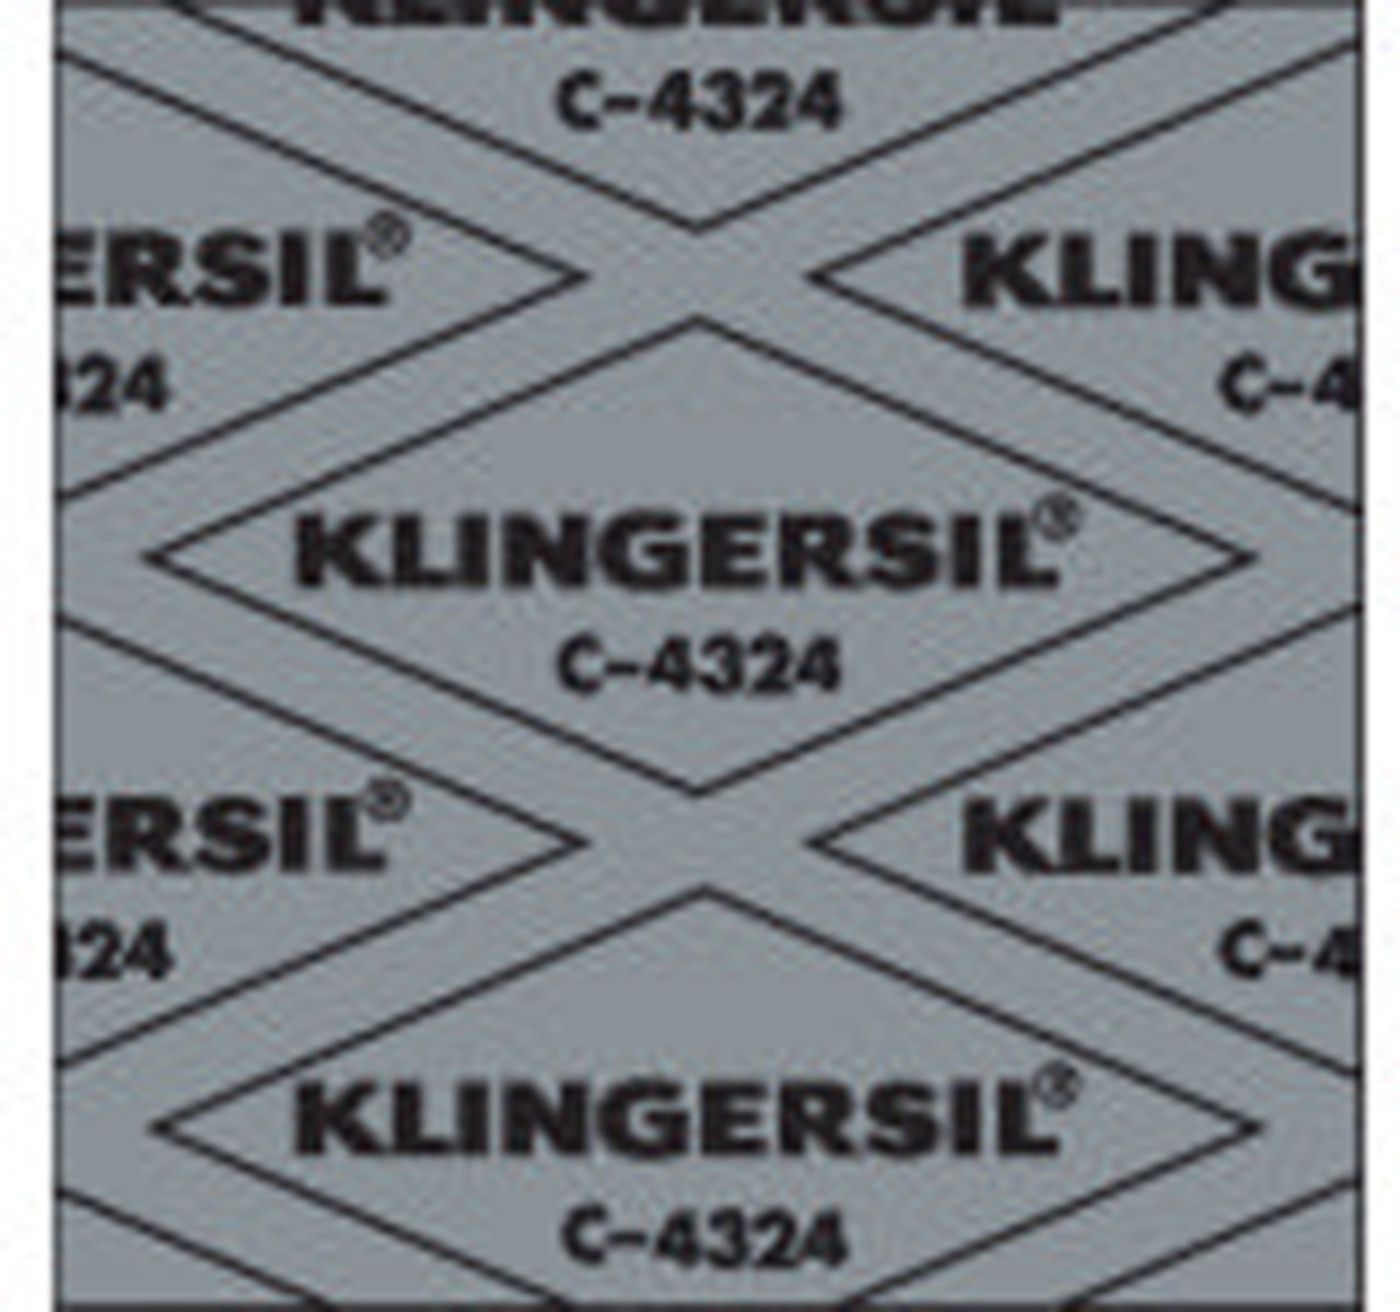 Klinger SIL C-4324 Platte 1500/1500/2 - Dichtungsmaterial